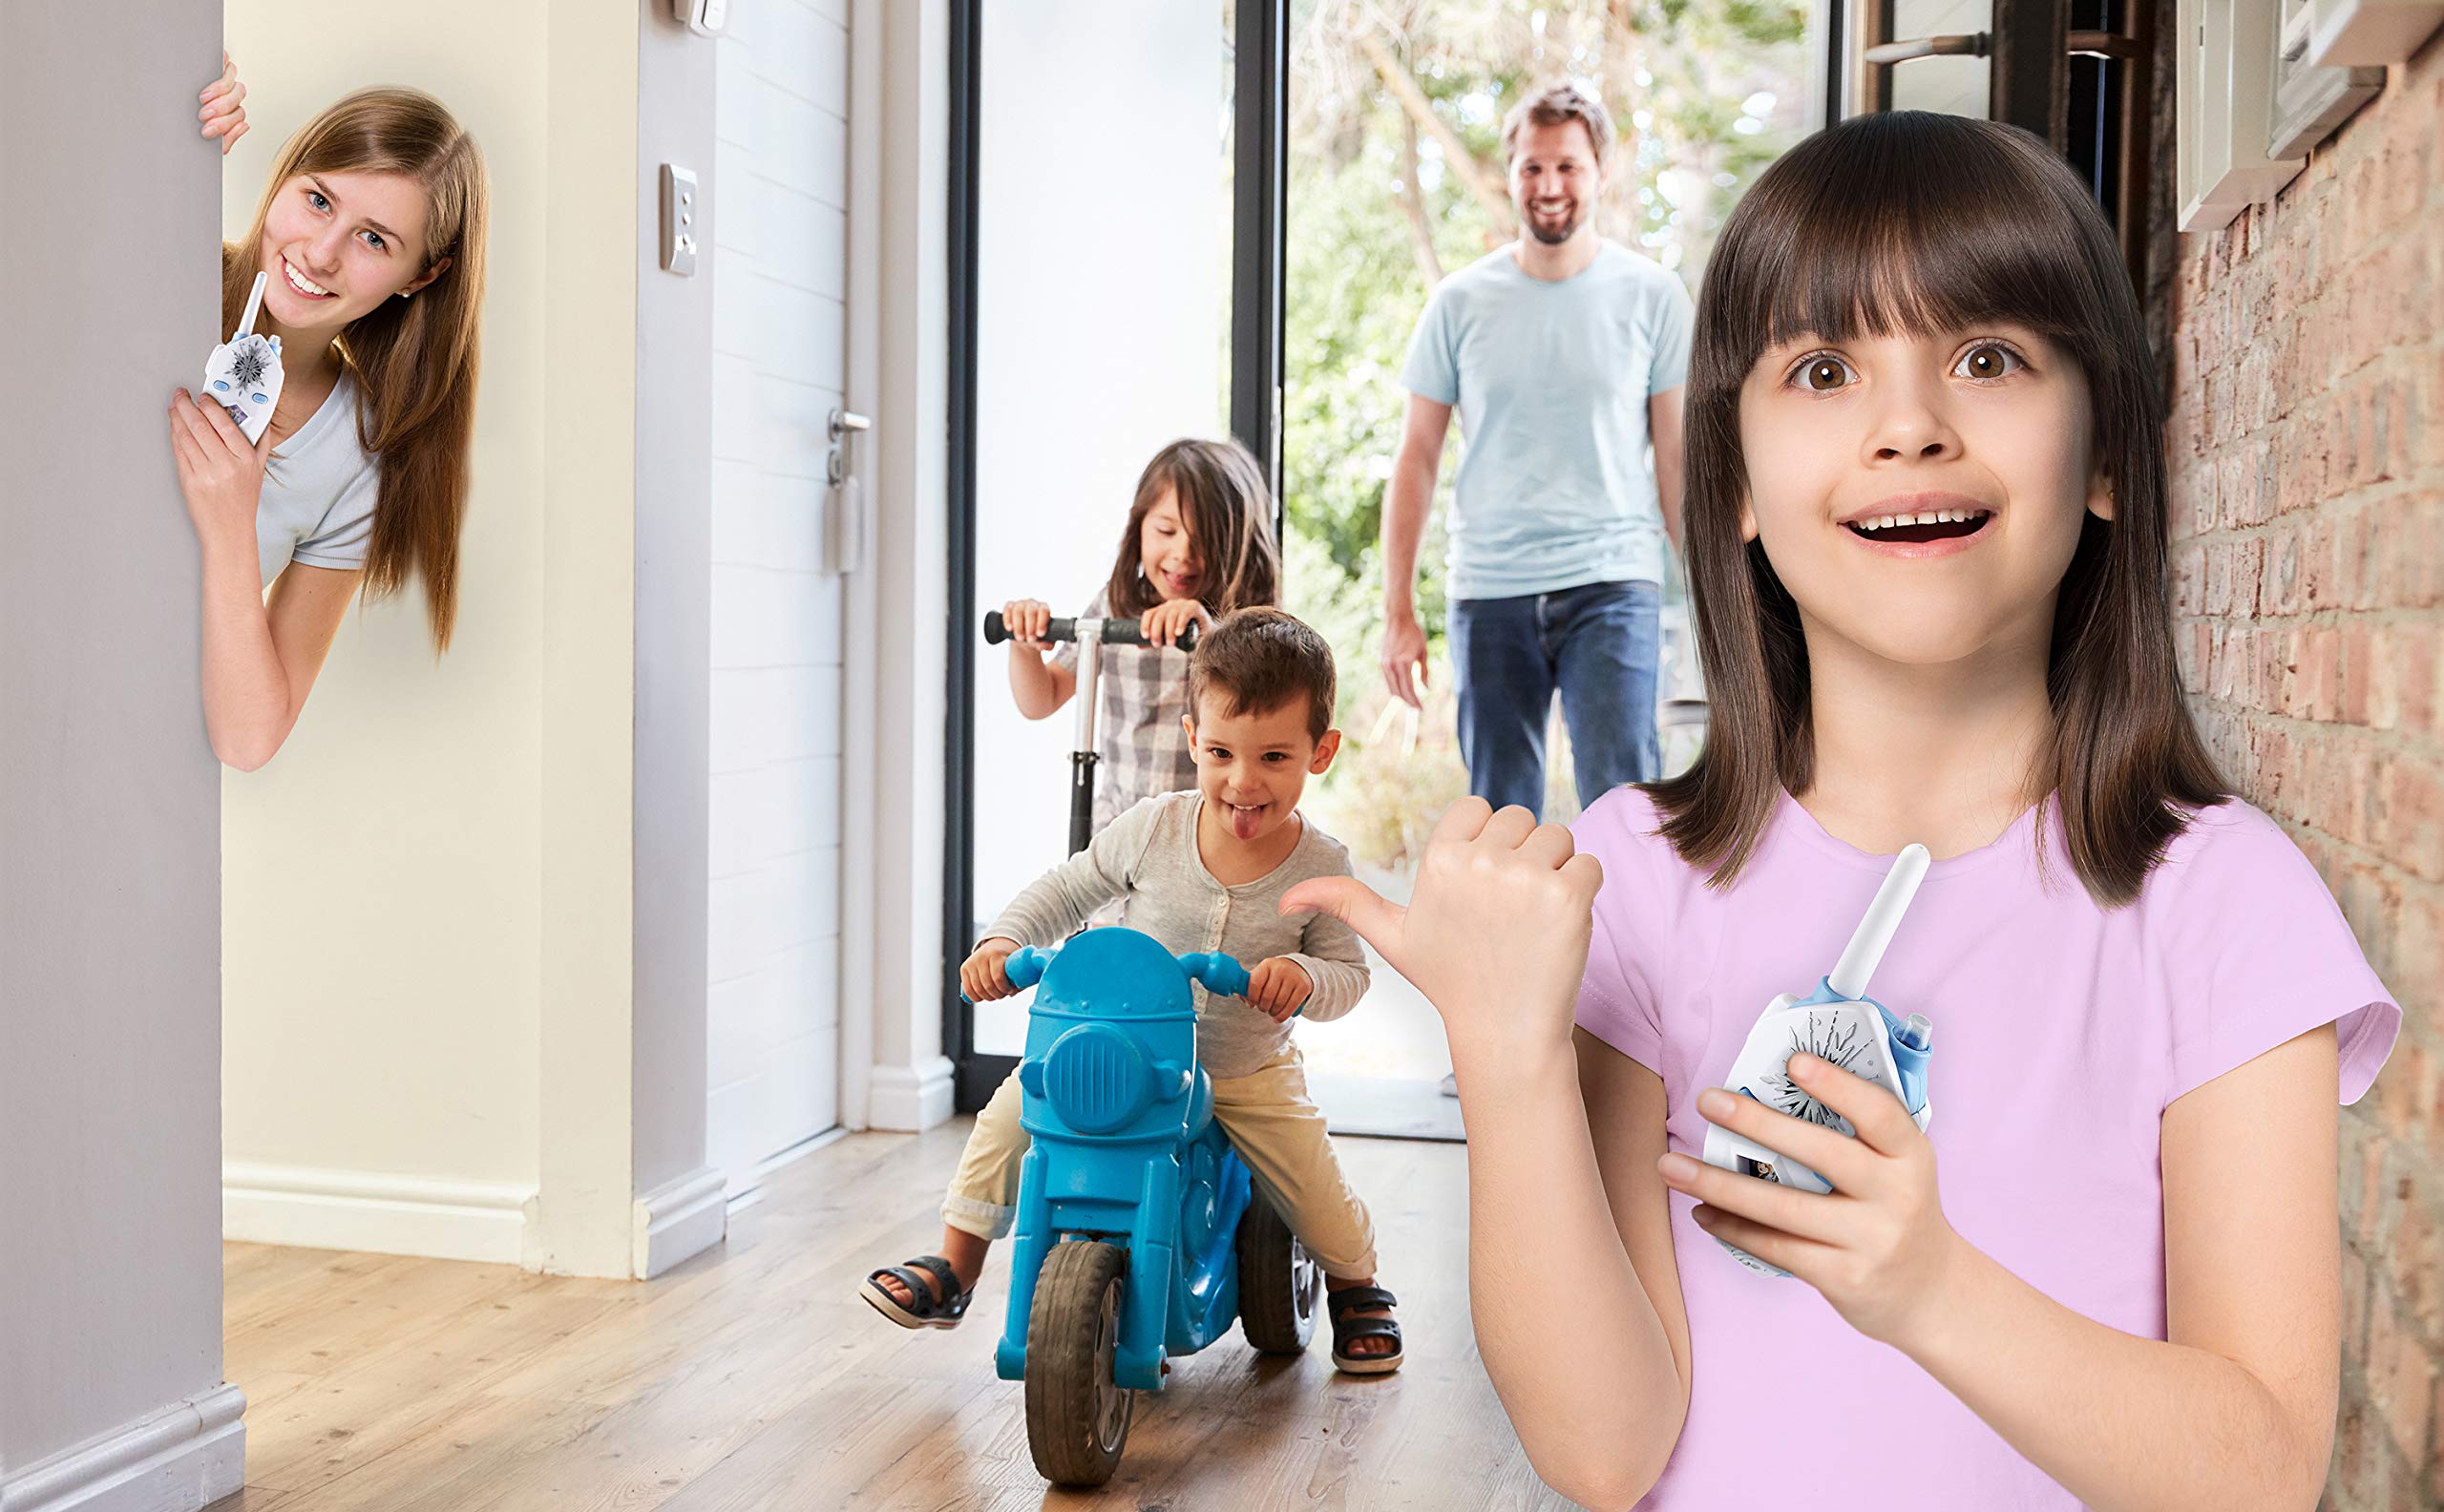 eKids Frozen 2 Walkie Talkies for Kids, 2 Way Radio Long Range with Flashing Lights & Sound Effects, Handheld Kids Walkie Talkies, Girls Kids Toys, Outdoor Indoor Adventure Game Play